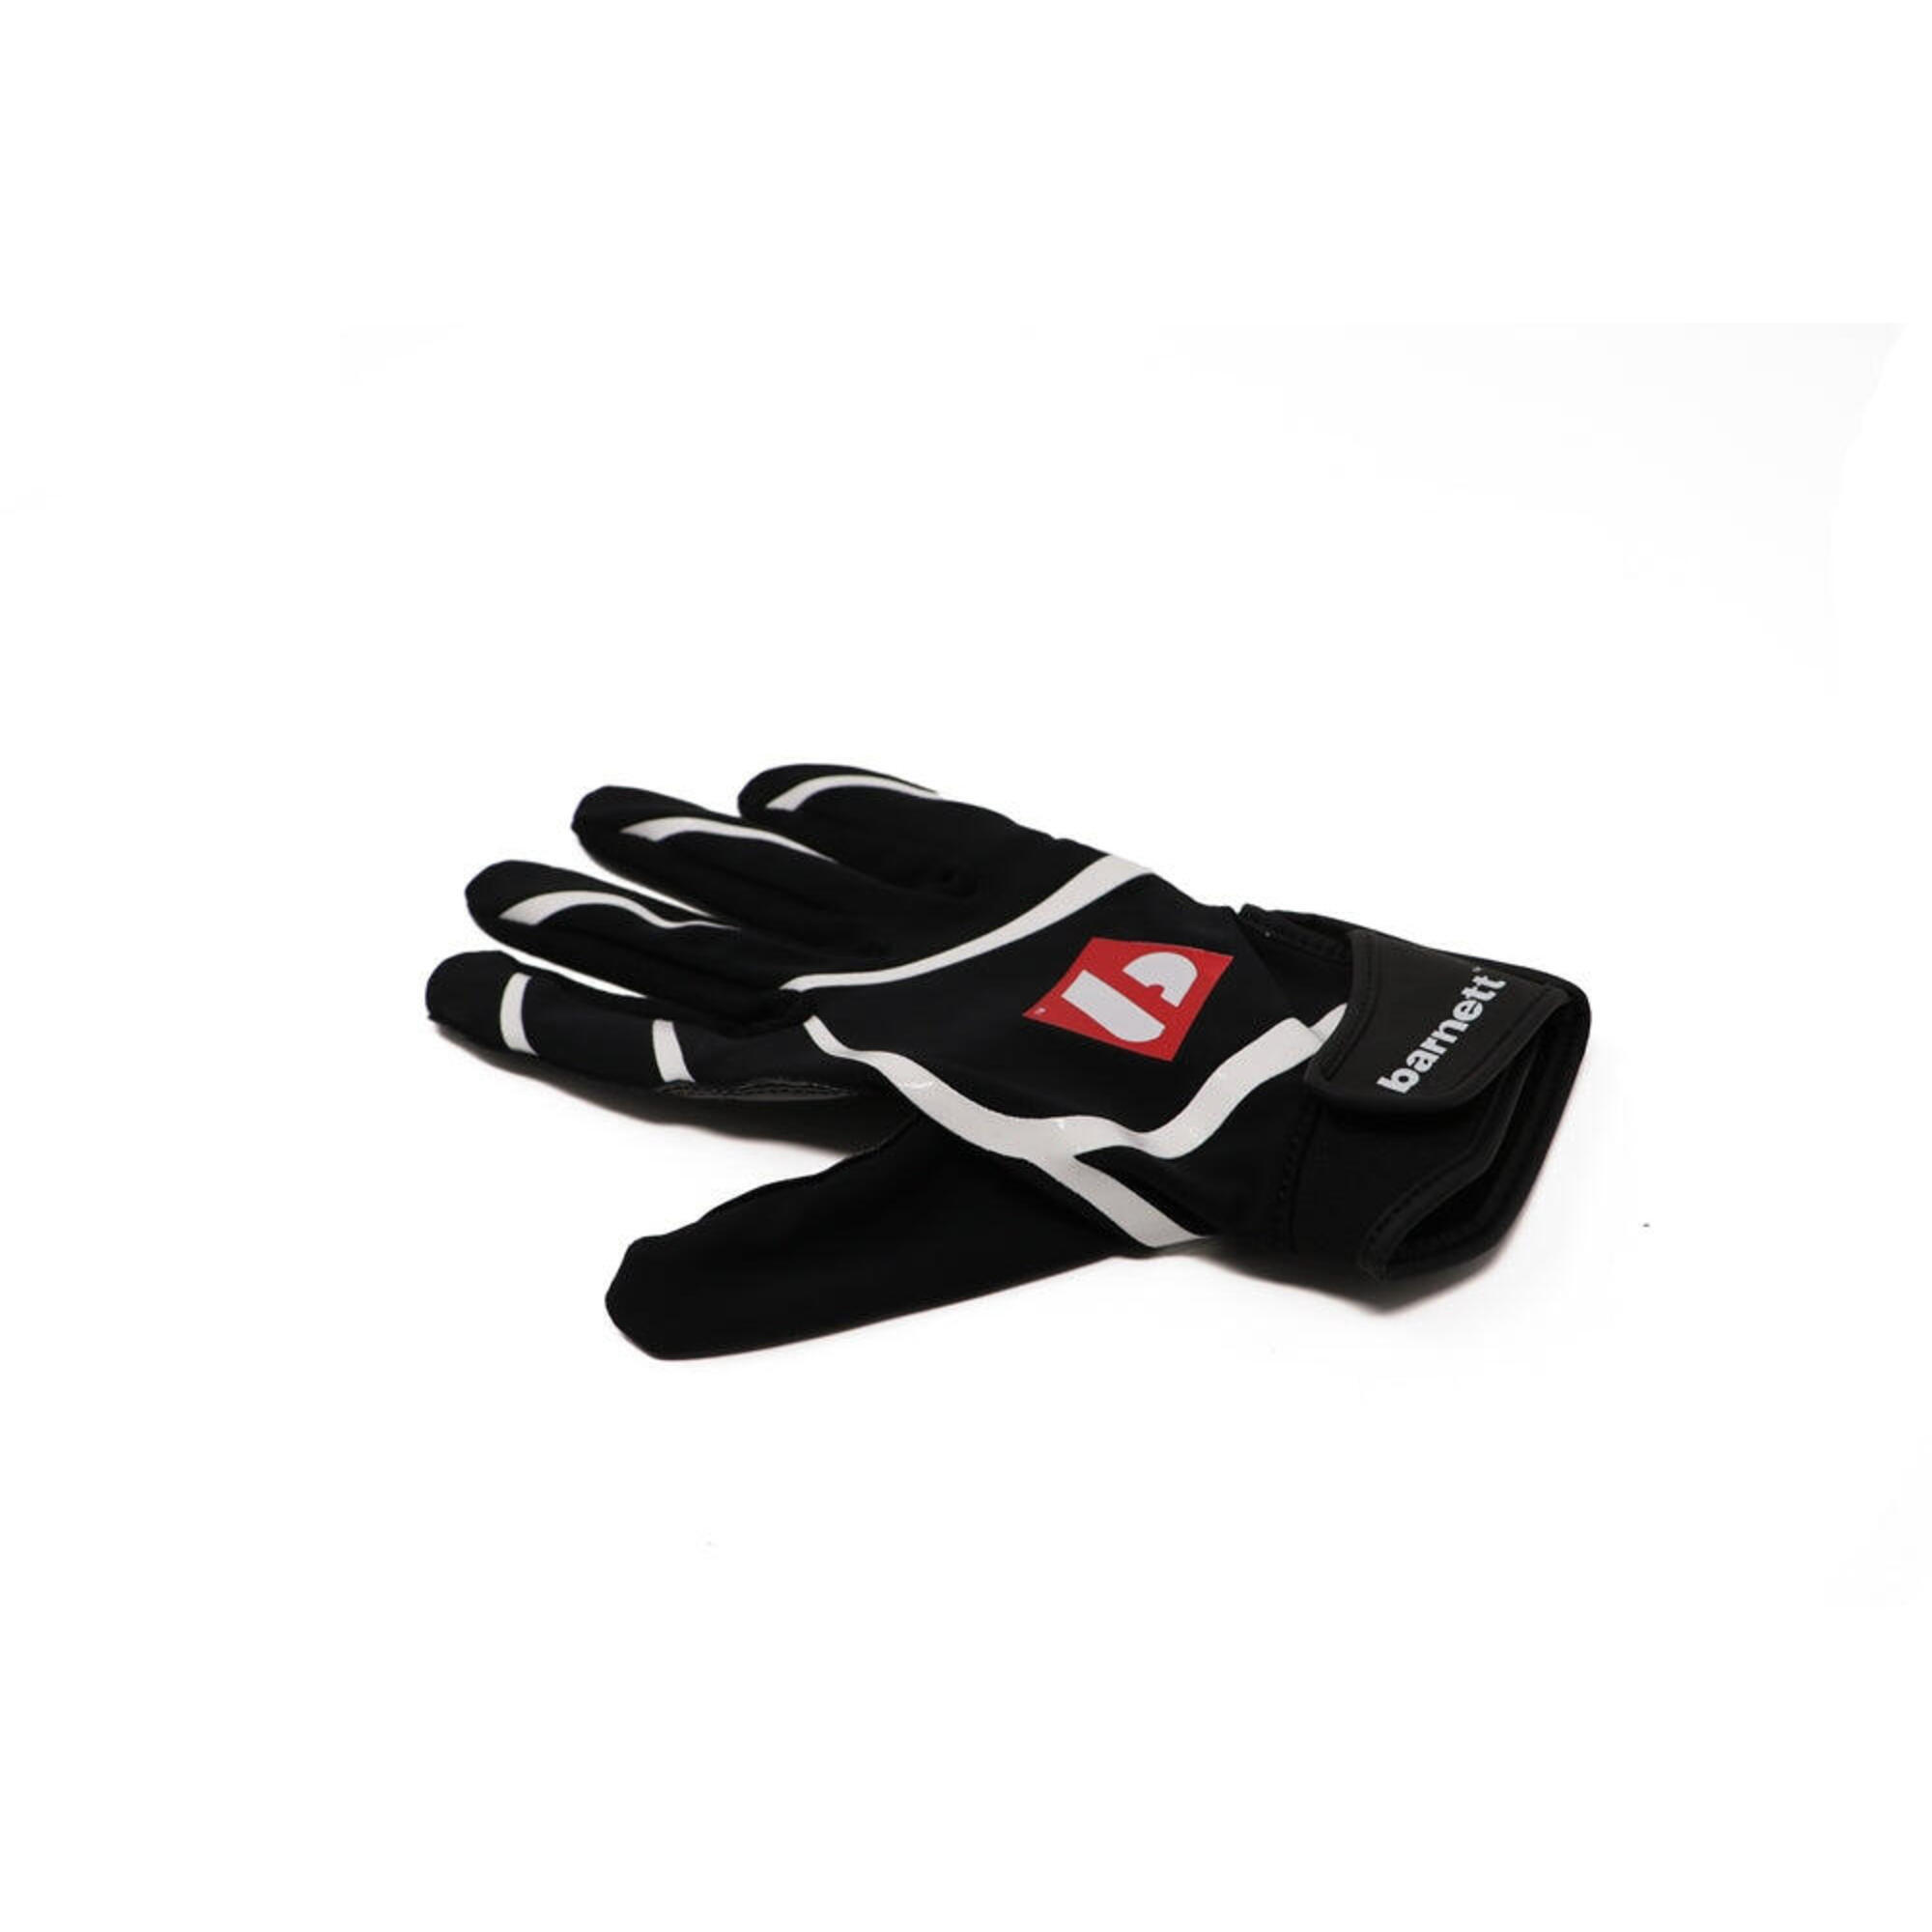  Pro Receiver American Football Gloves, RE, DB, RB, Black FRG-03 5/5